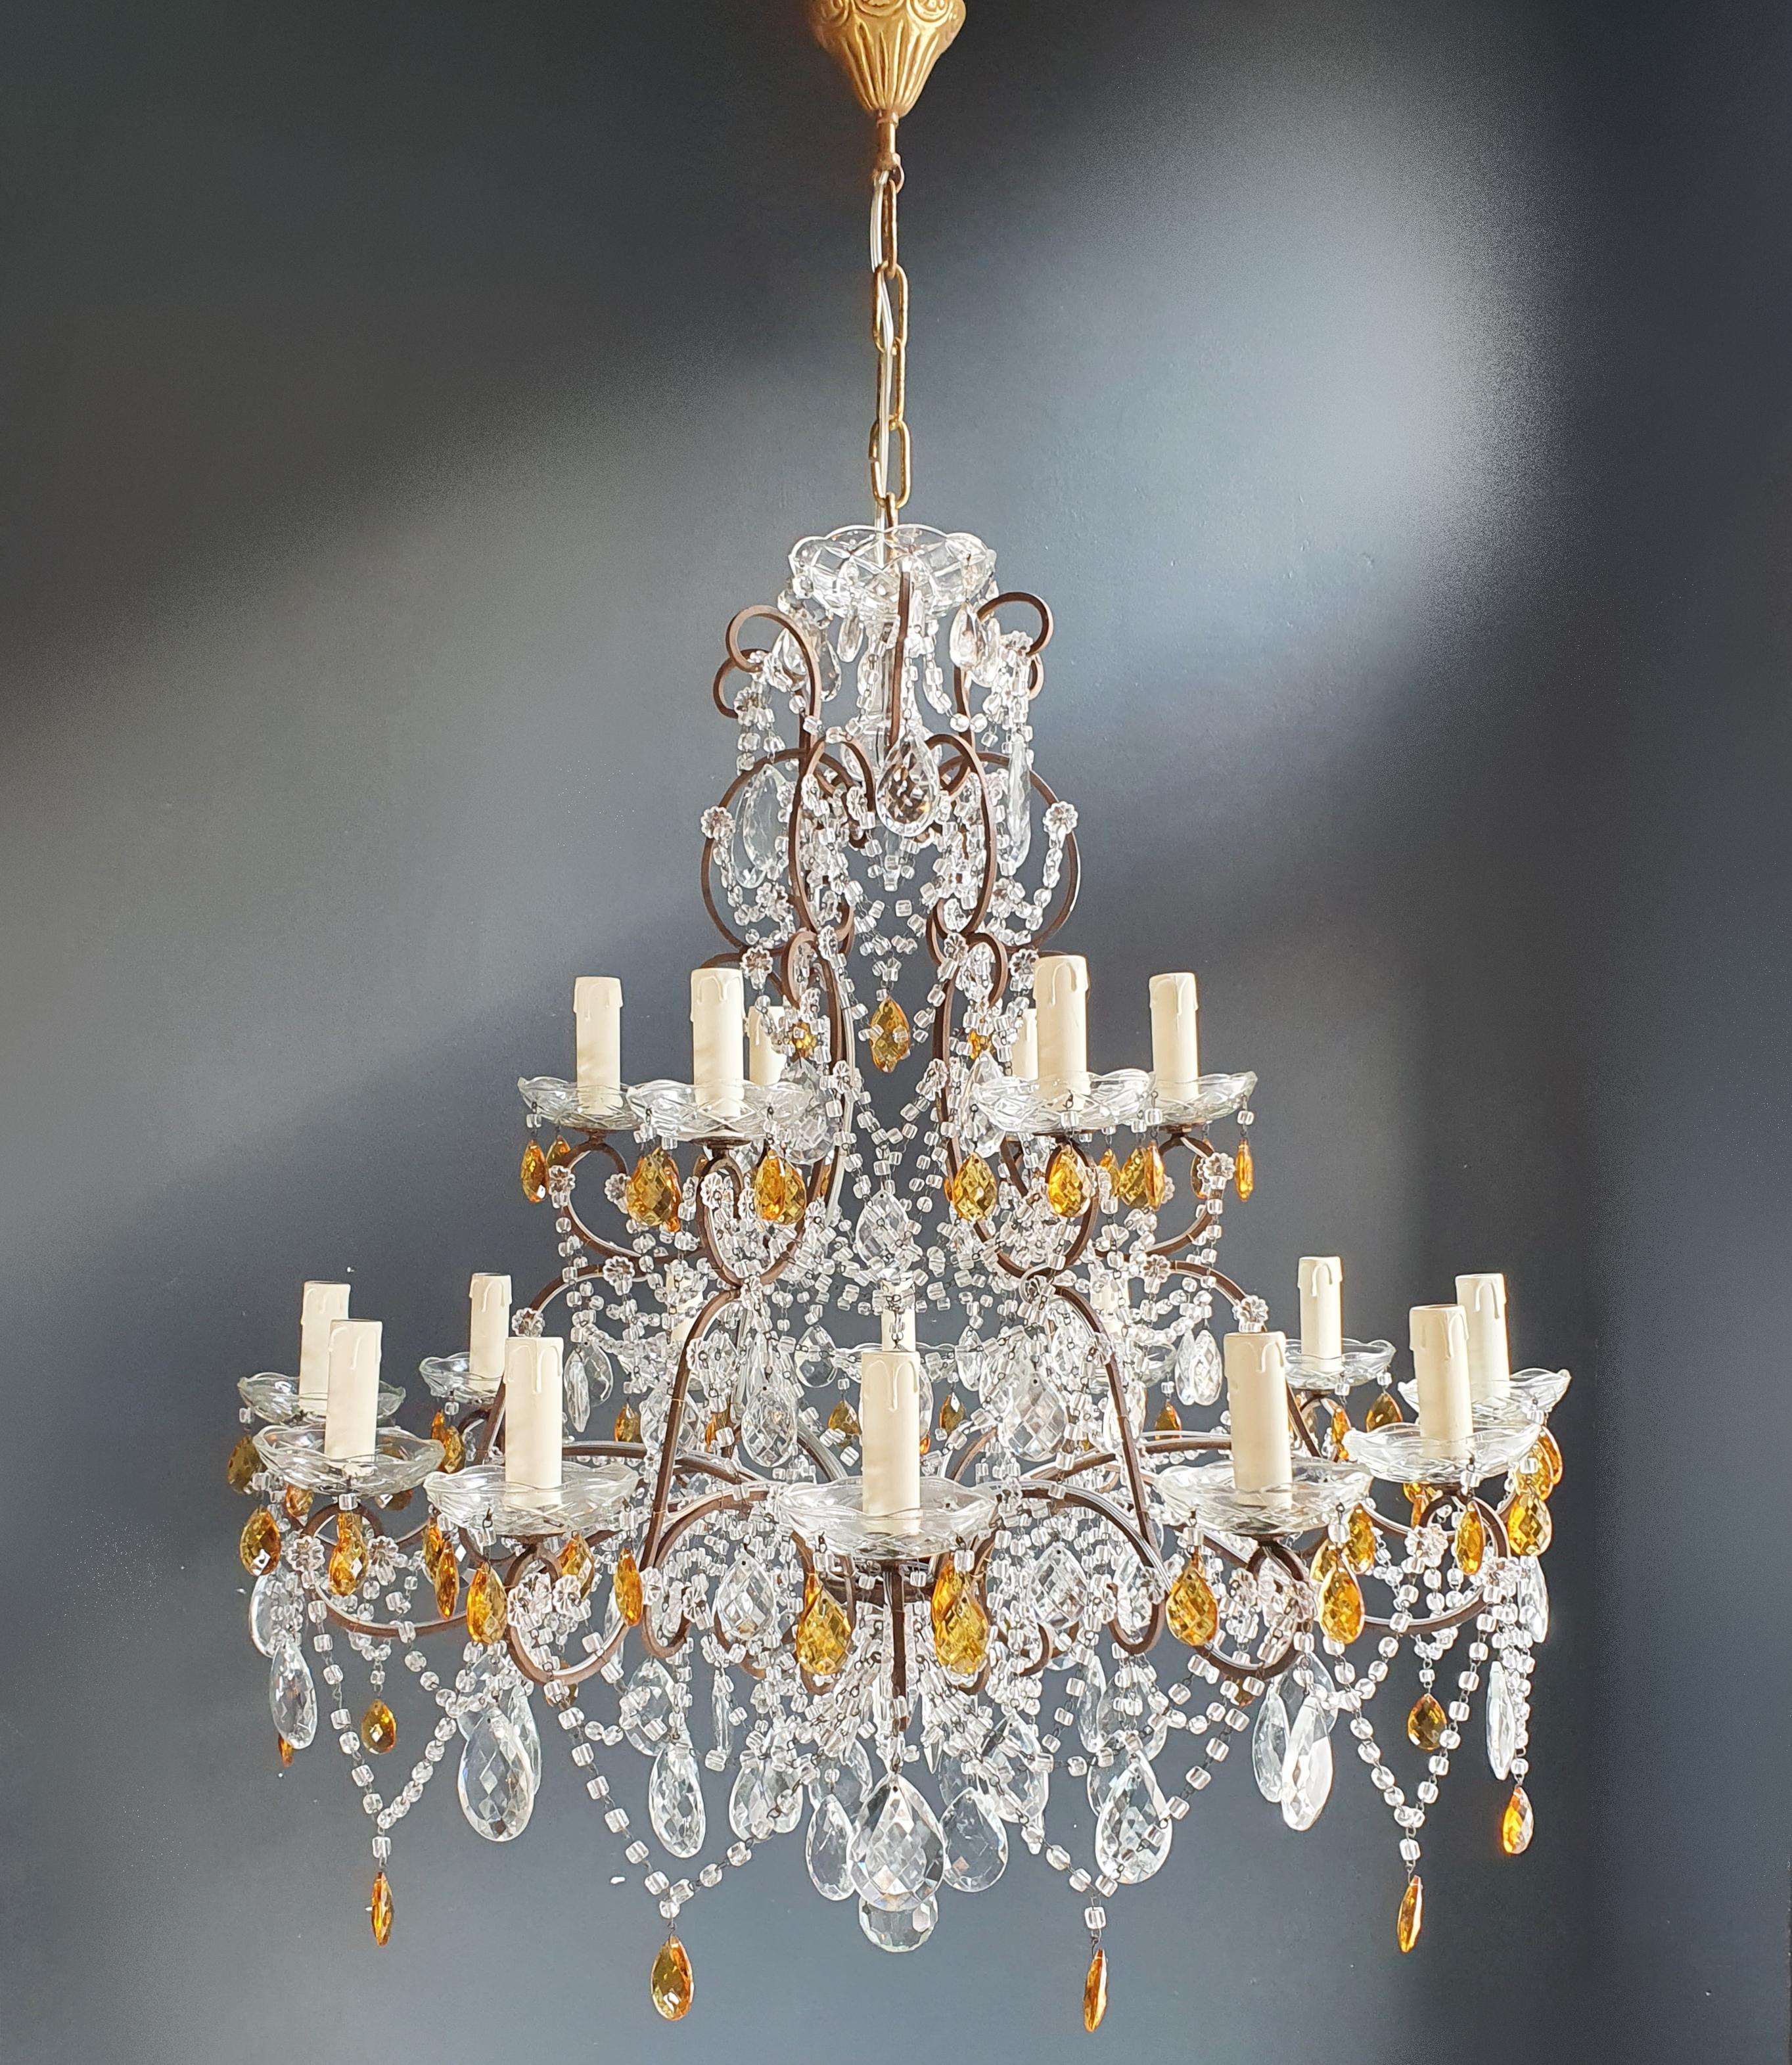 Hand-Crafted Amber Crystal Antique Chandelier Ceiling Florentiner Lustre Art Nouveau For Sale